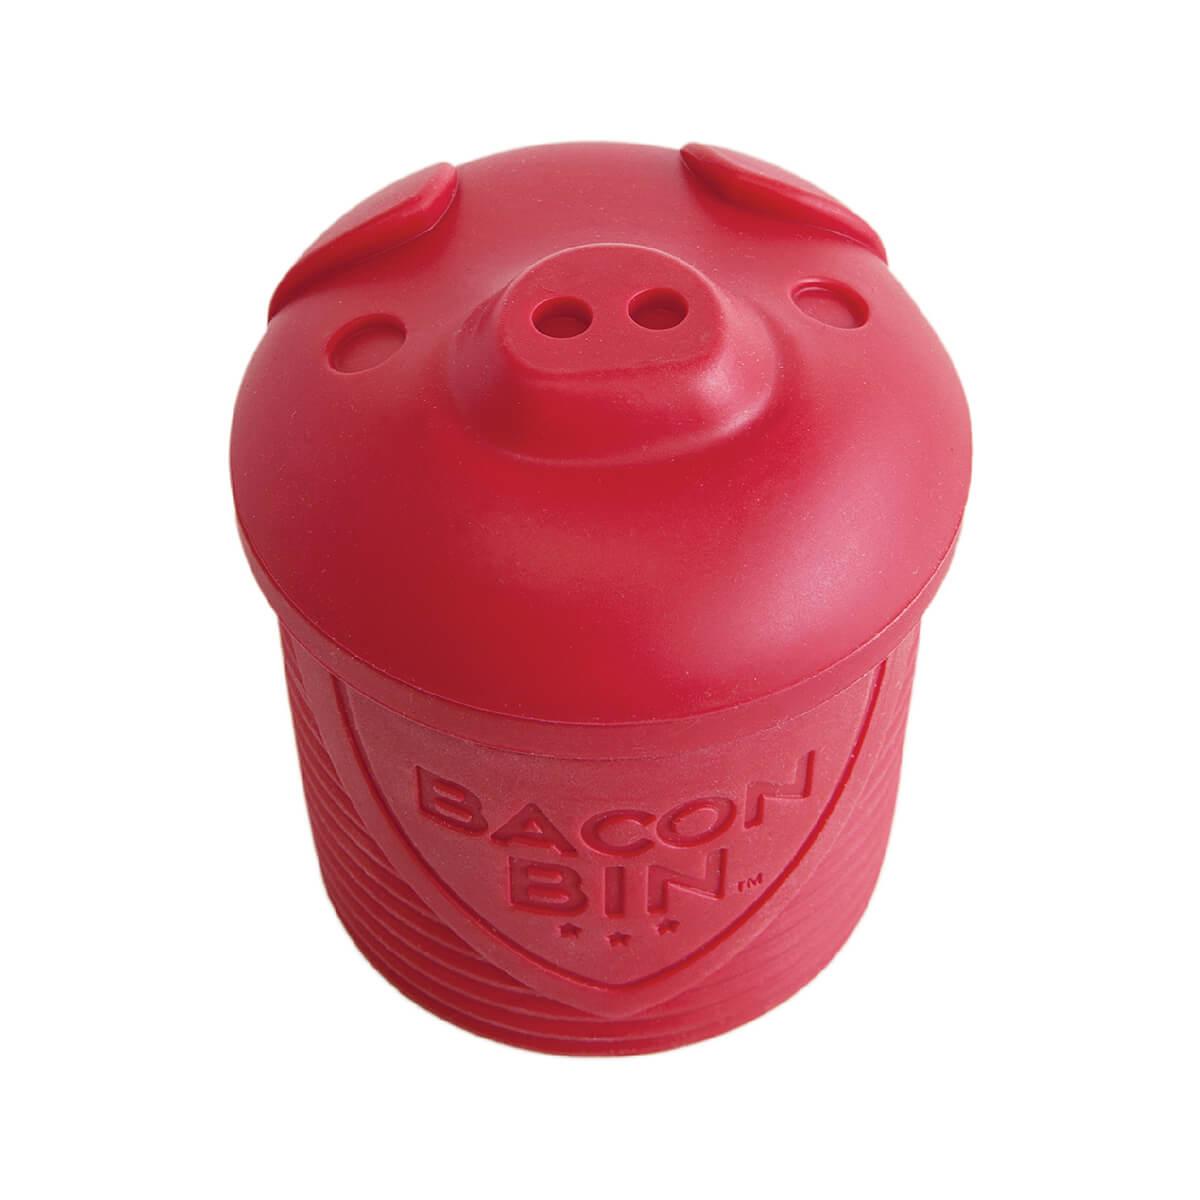  Bacon Bin